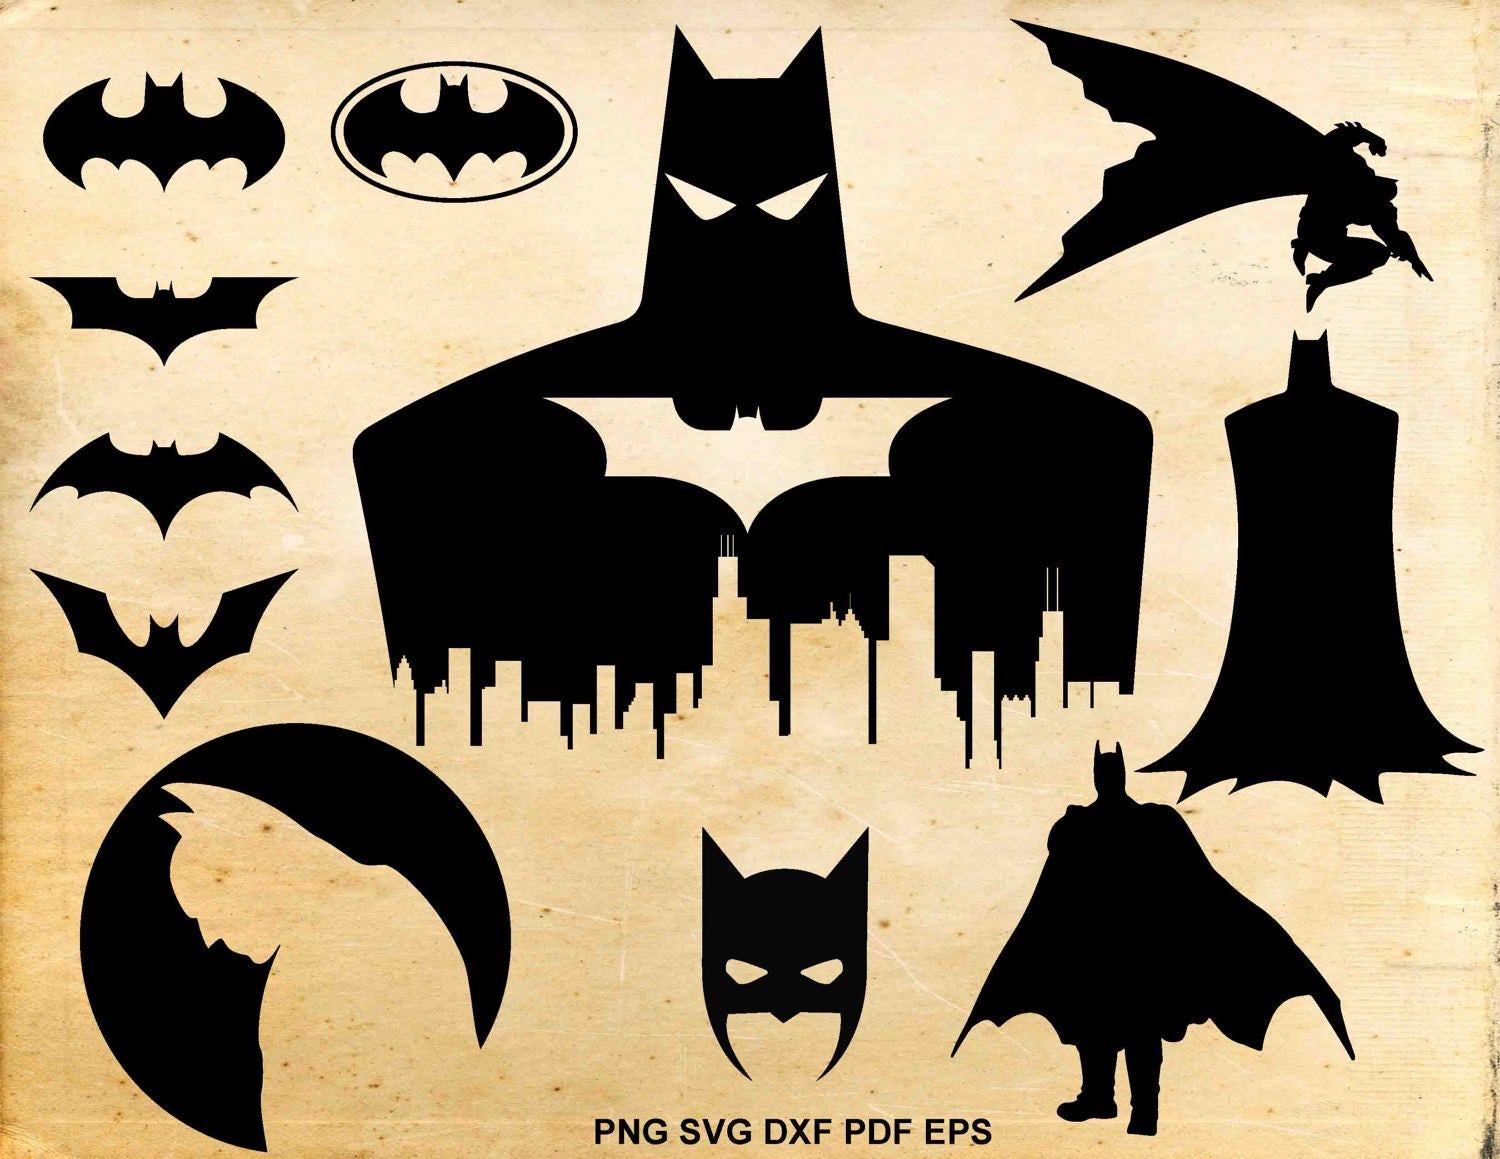 Download Free Batman Svg Download Batman Arts Logo Vector In Eps Ai Cdr Free Download Batman Mask Svg Batman Mask Vector Batman Mask Digital Clipart For Design Print Or More Files